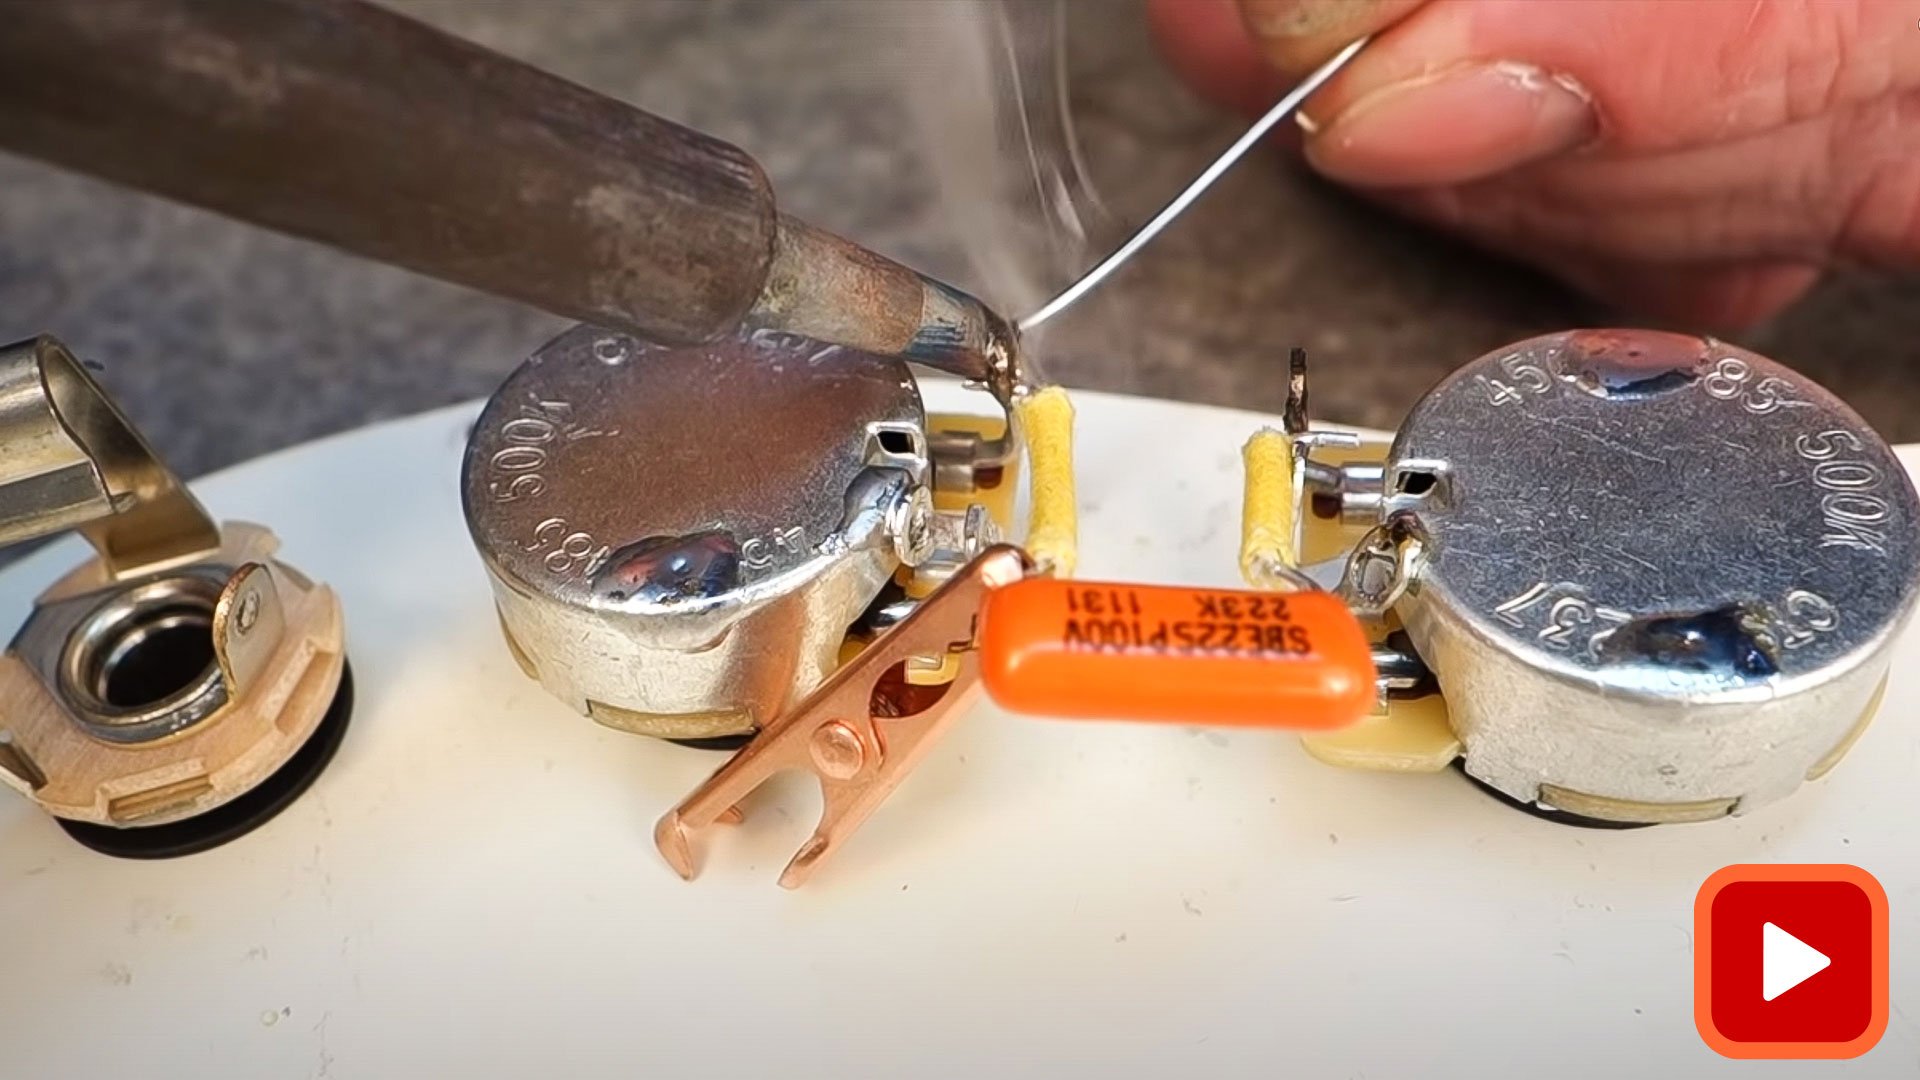 Soldering capacitors to potentiometers with heat sinks